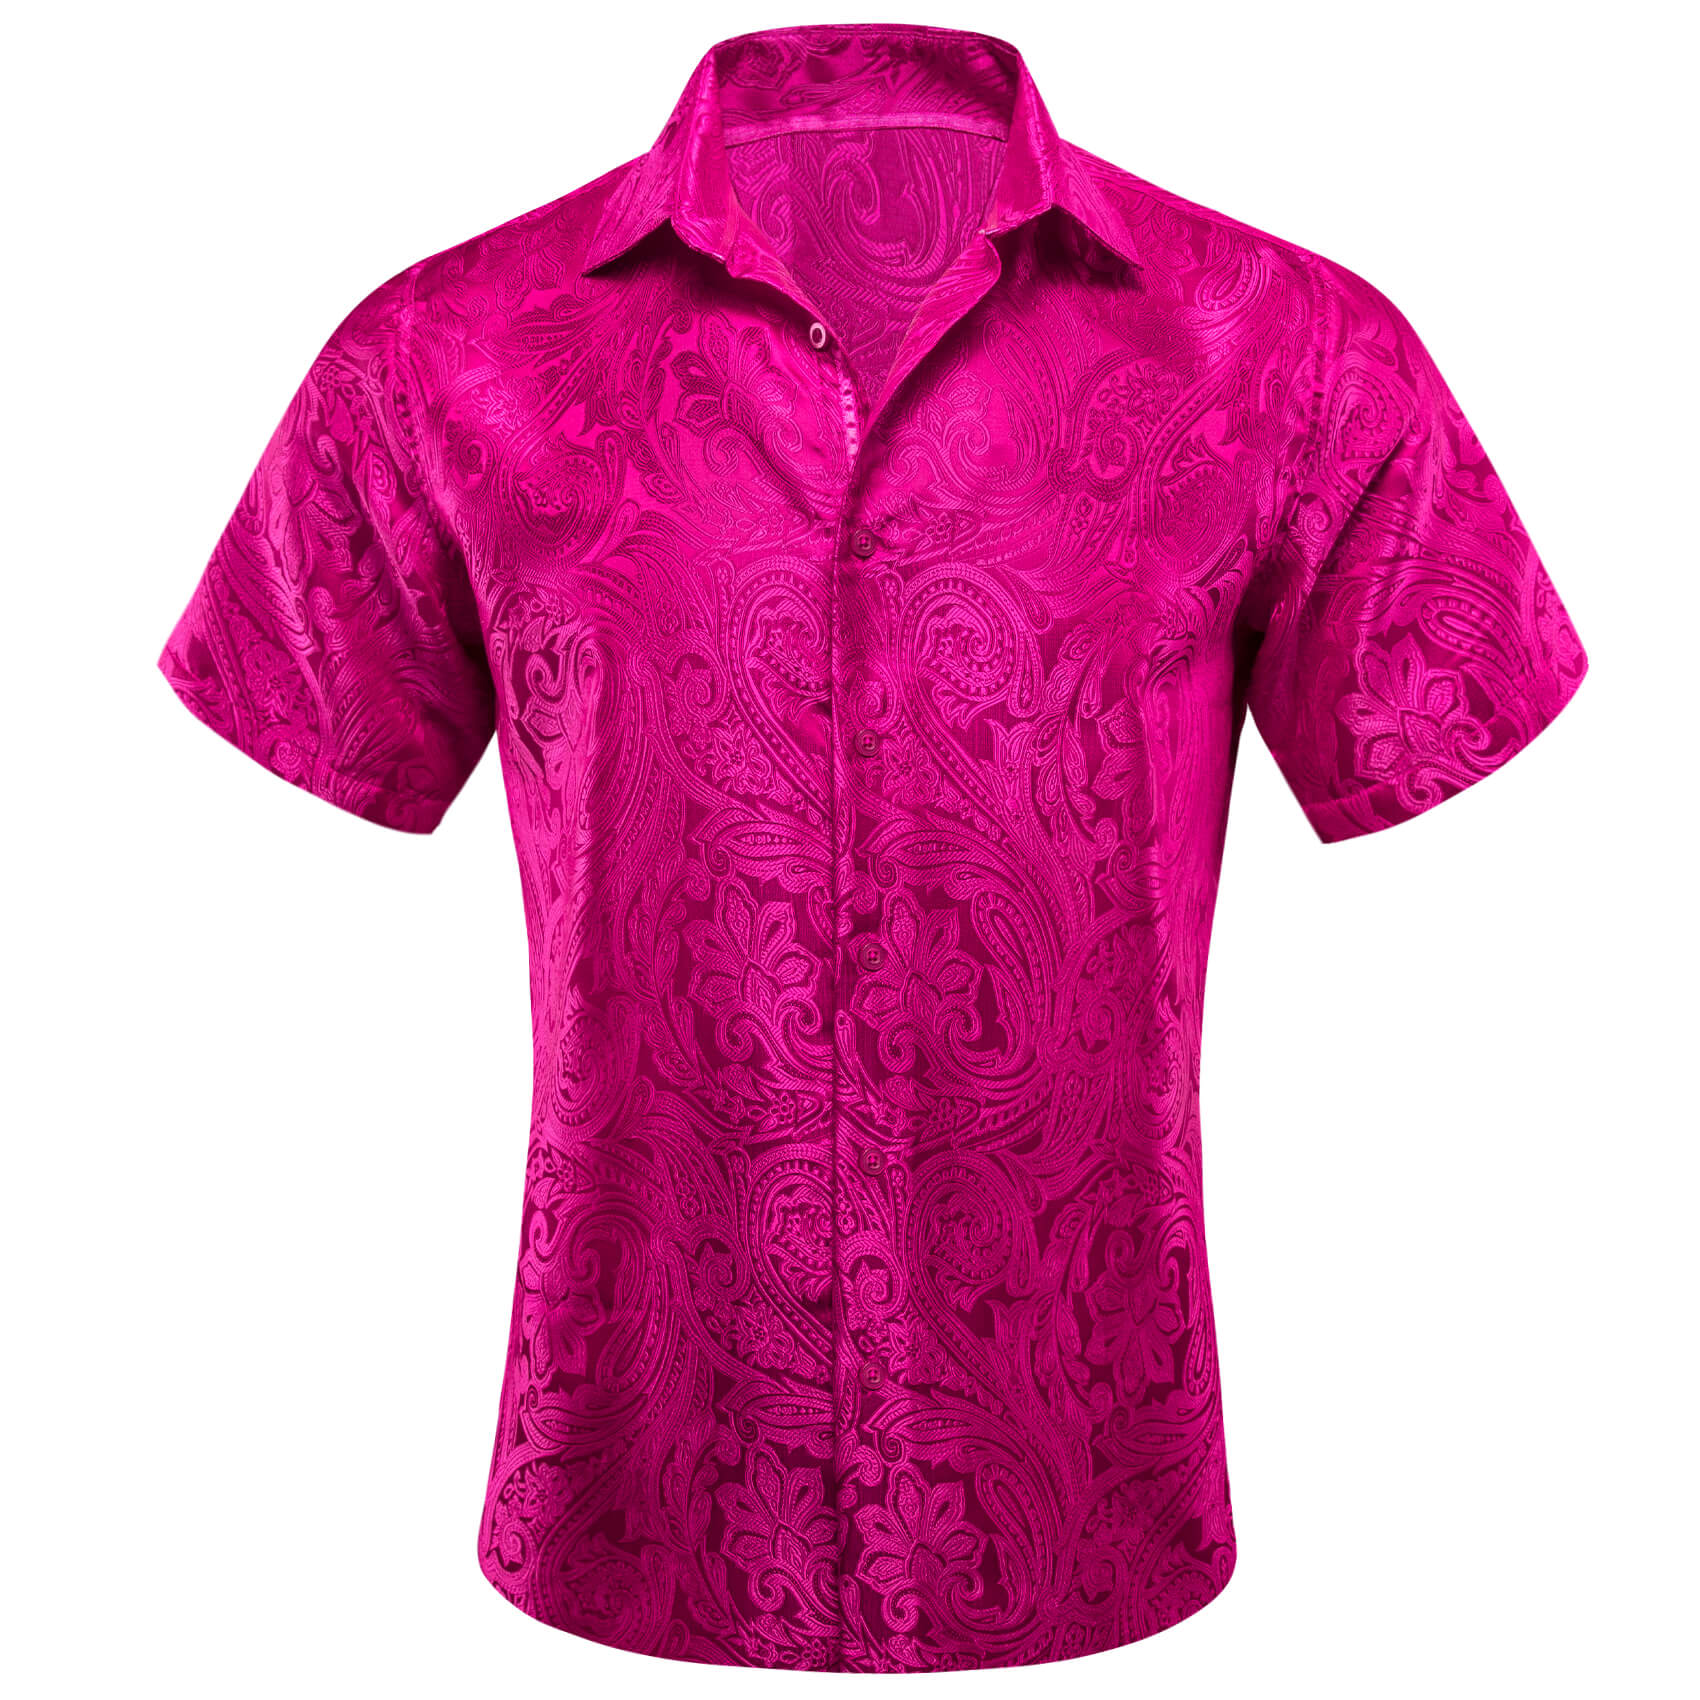 Barry Wang Short Sleeve Shirt Jacquard Paisley MediumVioletRed Shirt